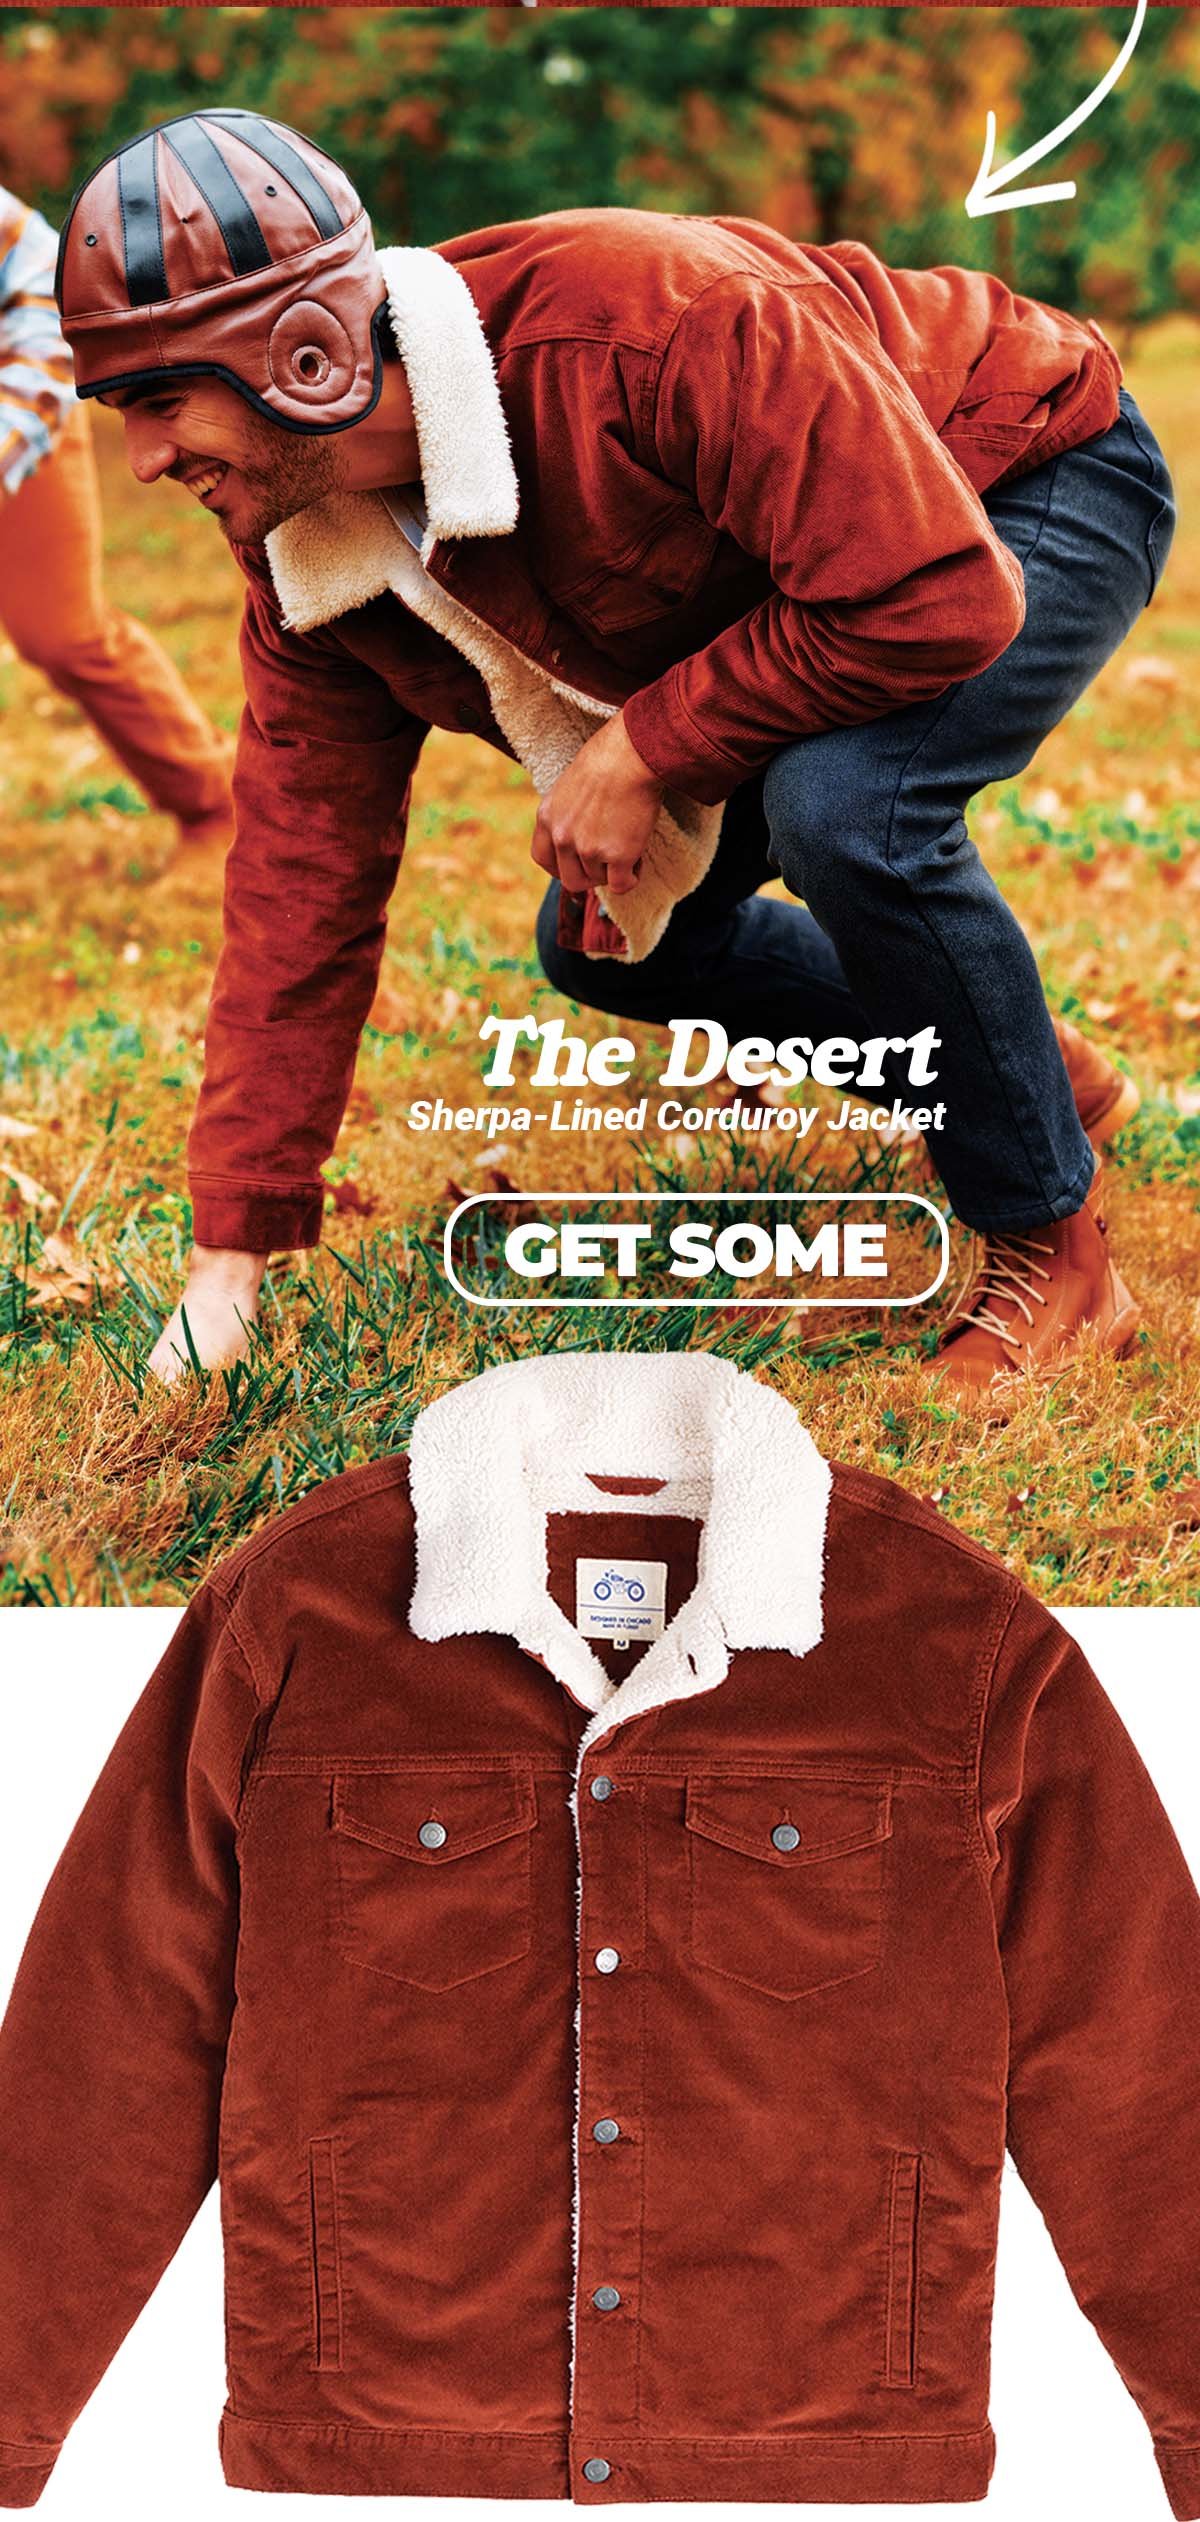 The Desert Sherpa-Lined Corduroy Jacket